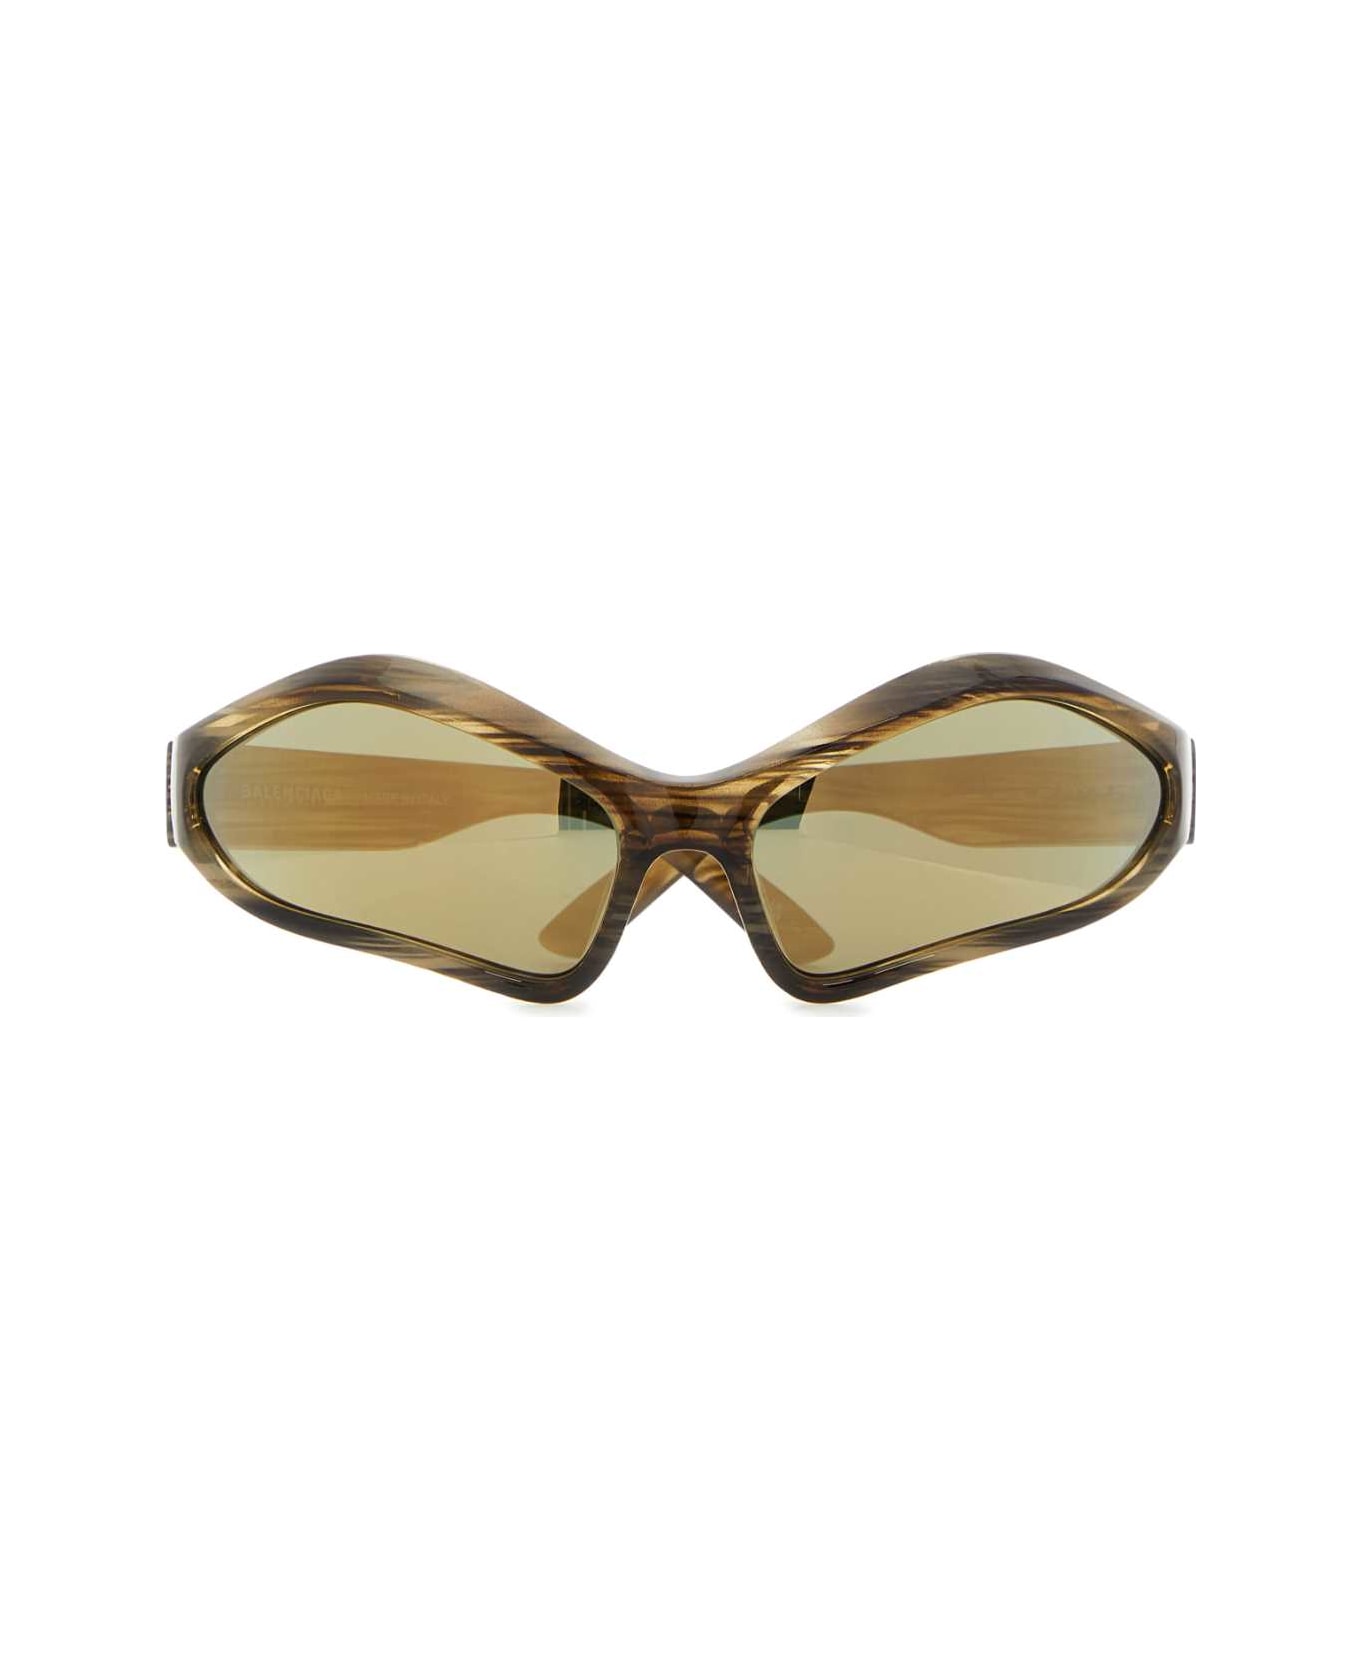 Balenciaga Multicolor Acetate Fennec Oval Sunglasses - HORNMIRRORBRONZE